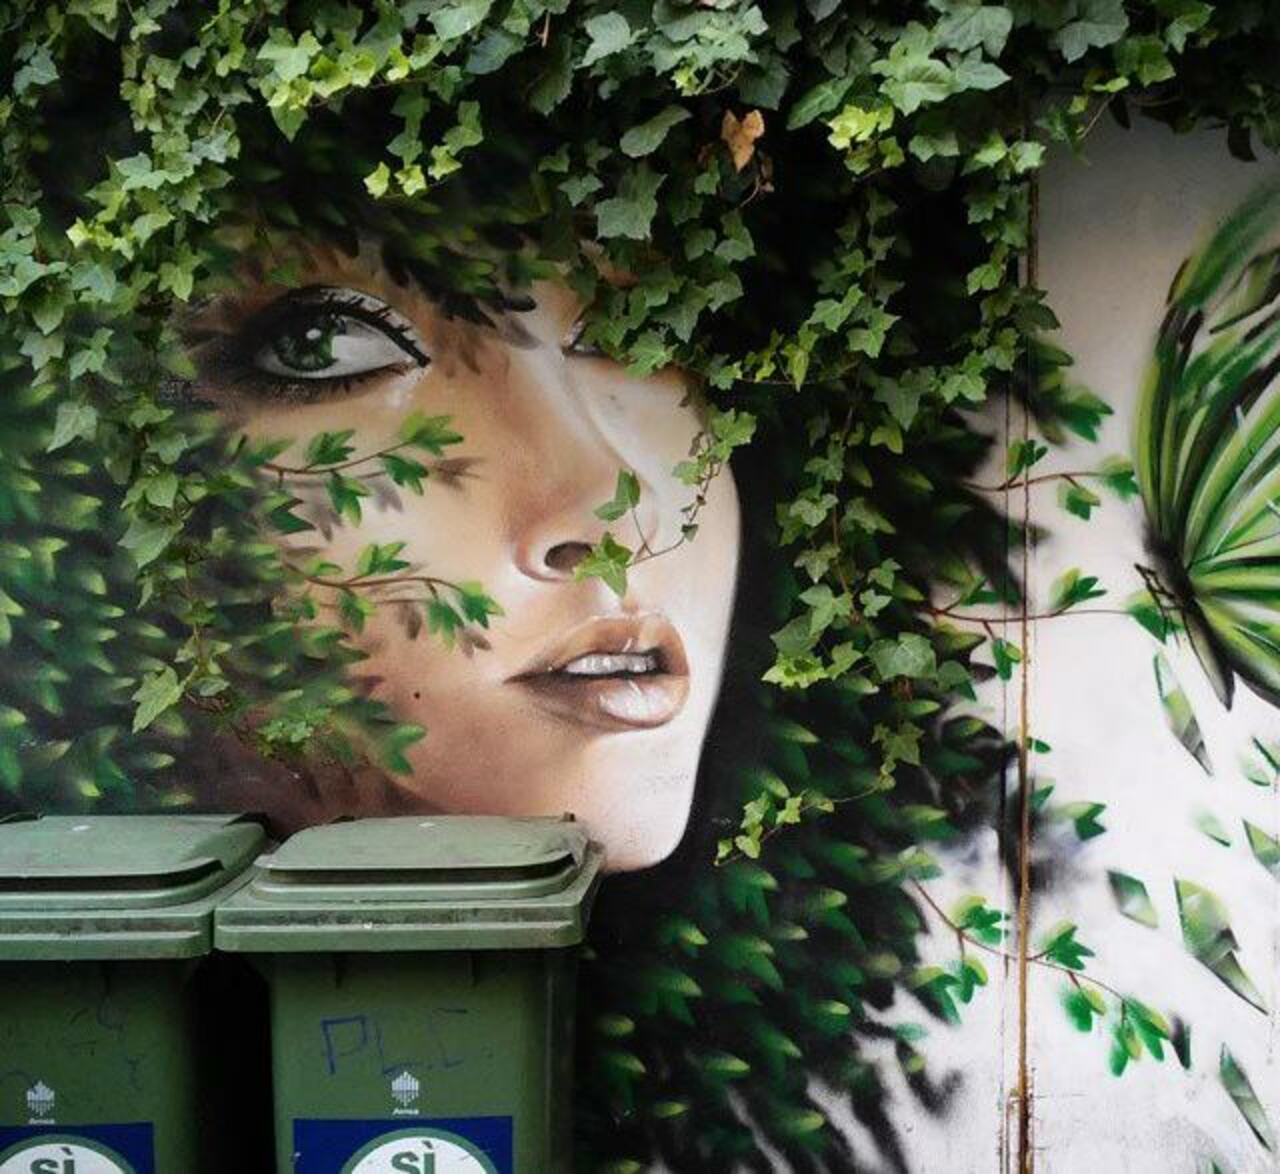 When Street Art meets nature by Dasxa in Isola, Millan 

#art #arte #graffiti #streetart http://t.co/ThjlmeMsoA